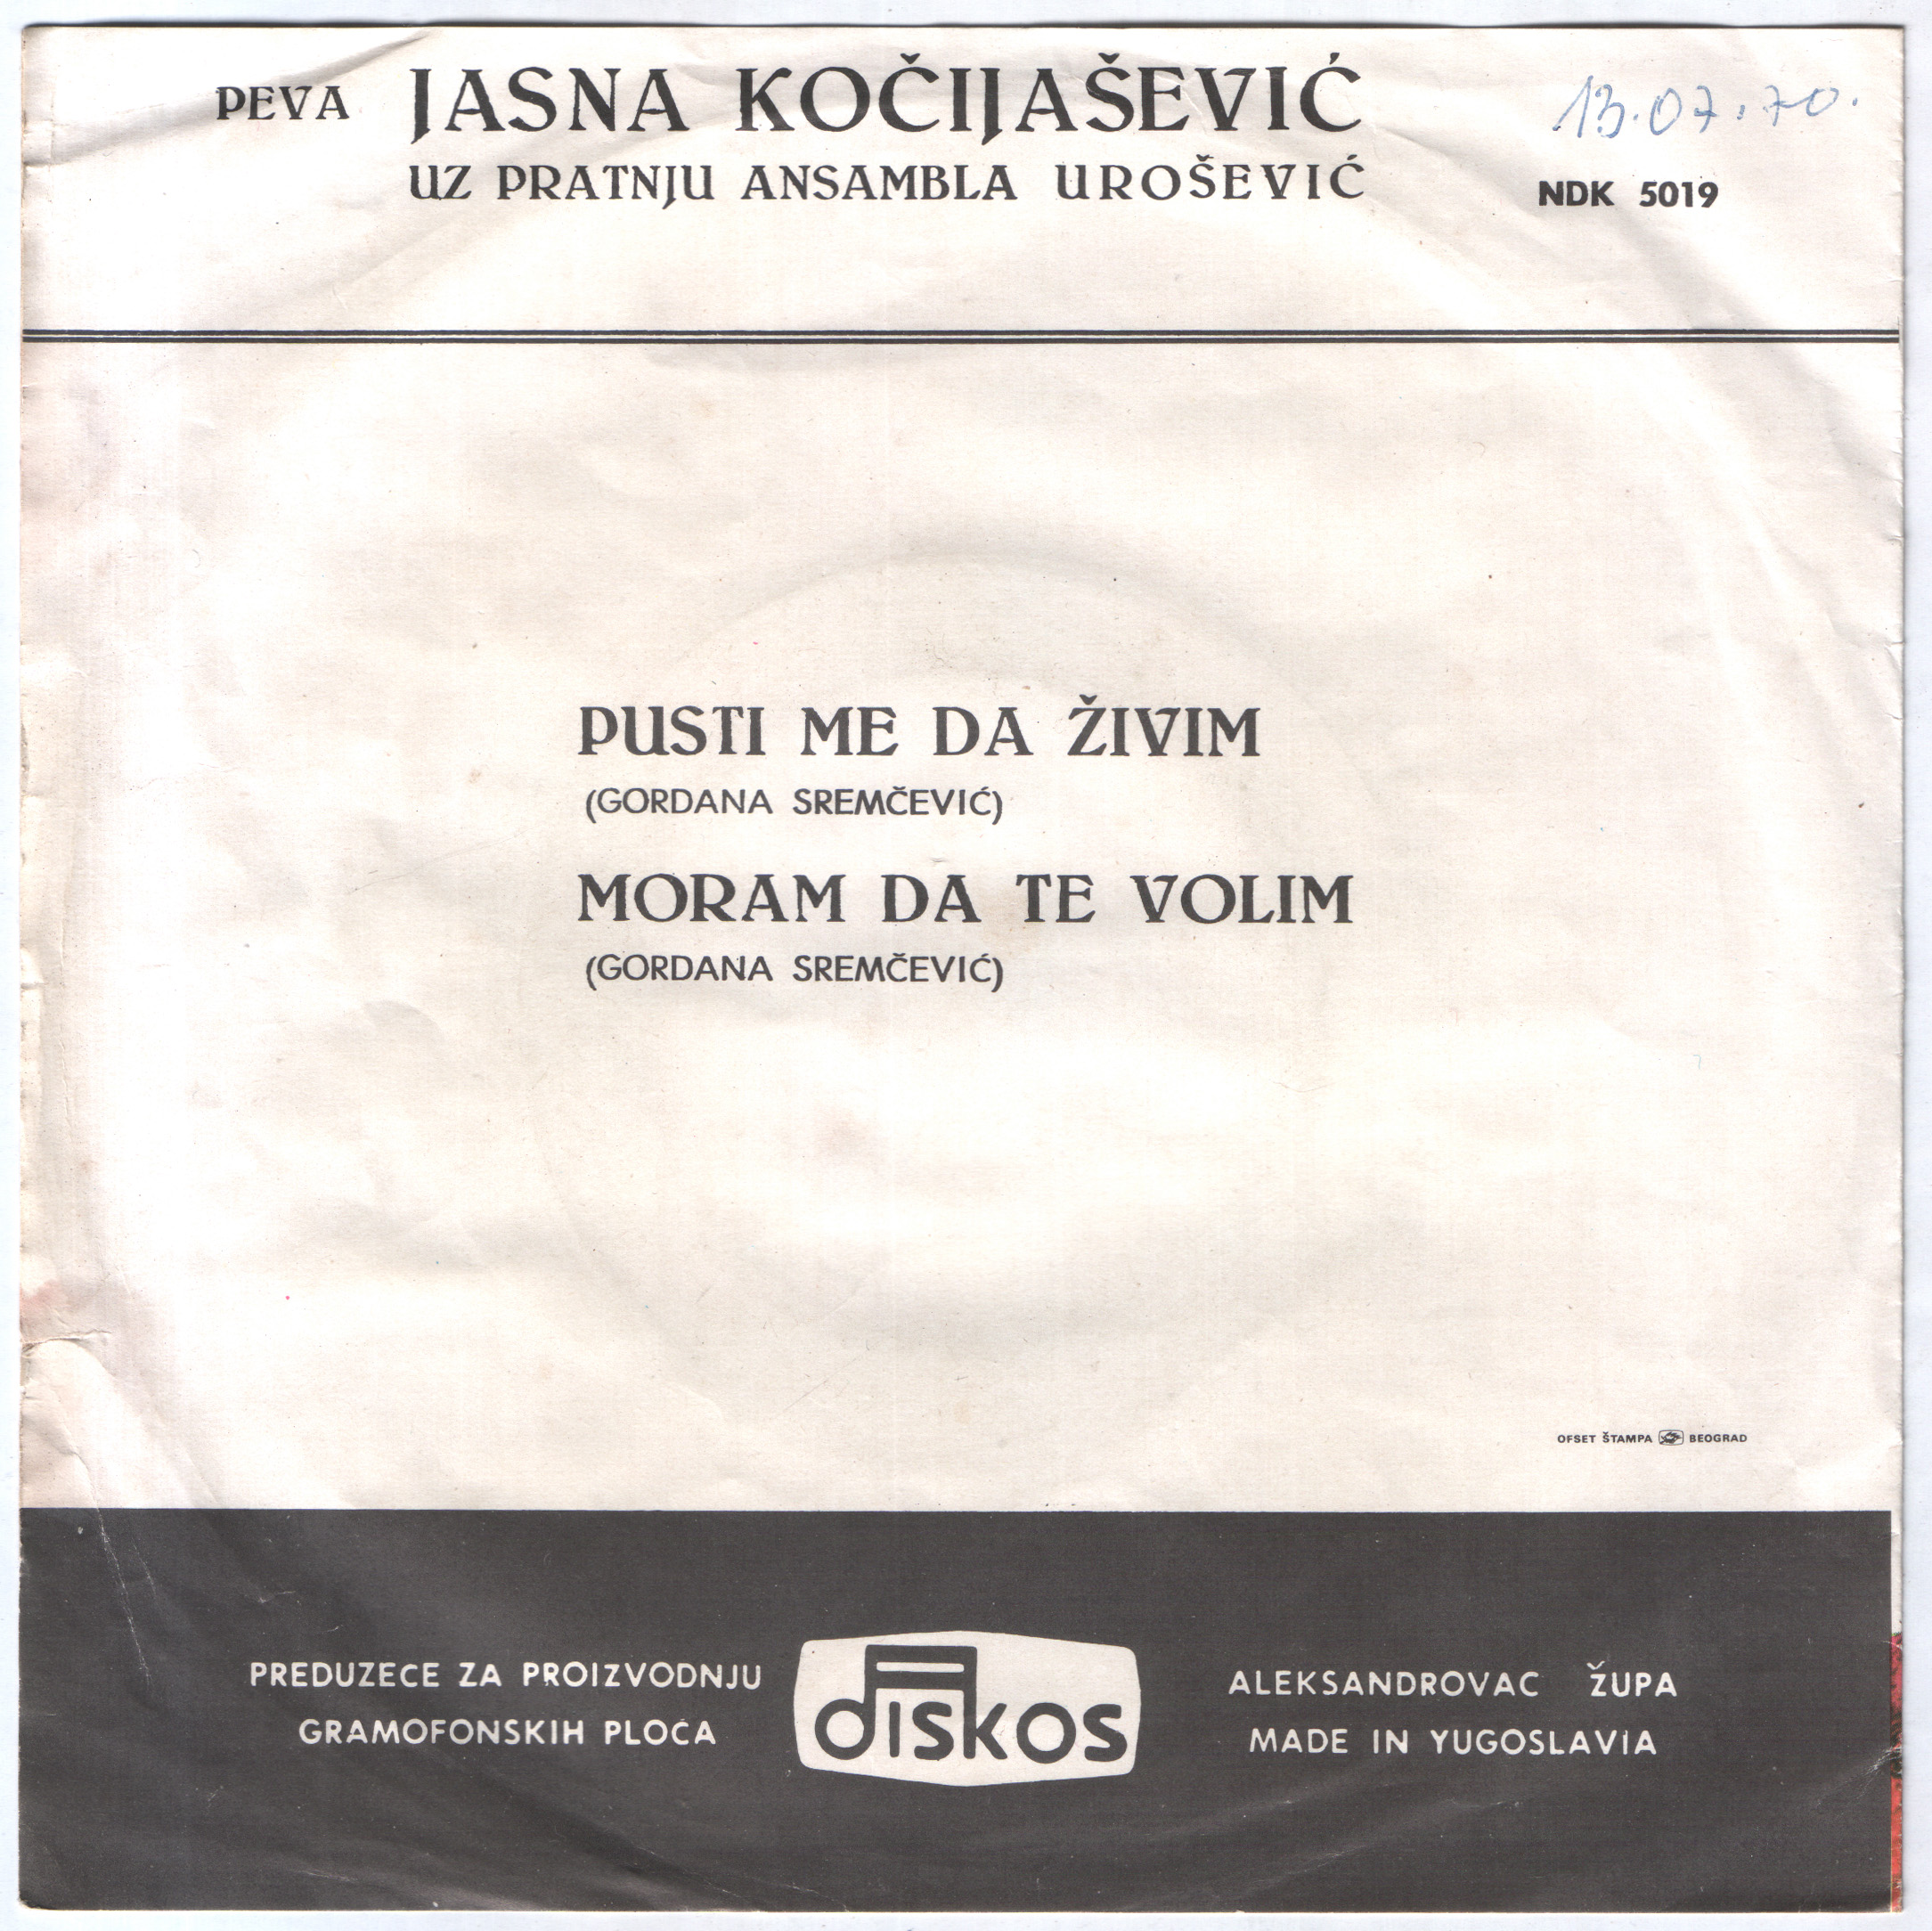 Jasna Kocijasevic 1970 ZB